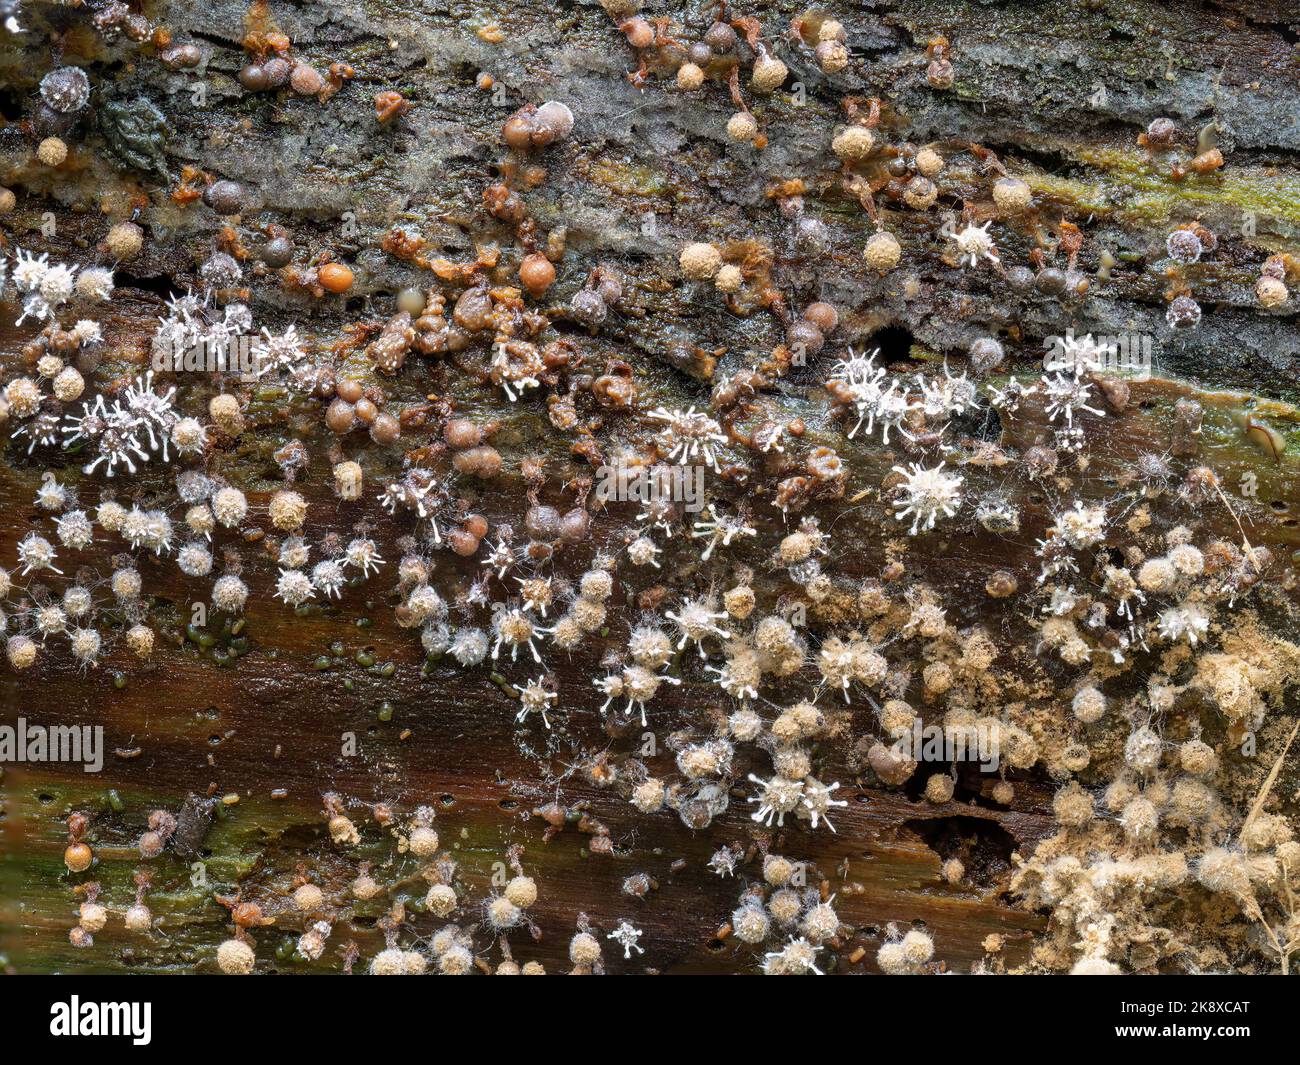 Parasitic fungus, Polycephalomyces tomentosus growing on Trichia slime mould, mold. Devon, UK. Stock Photo